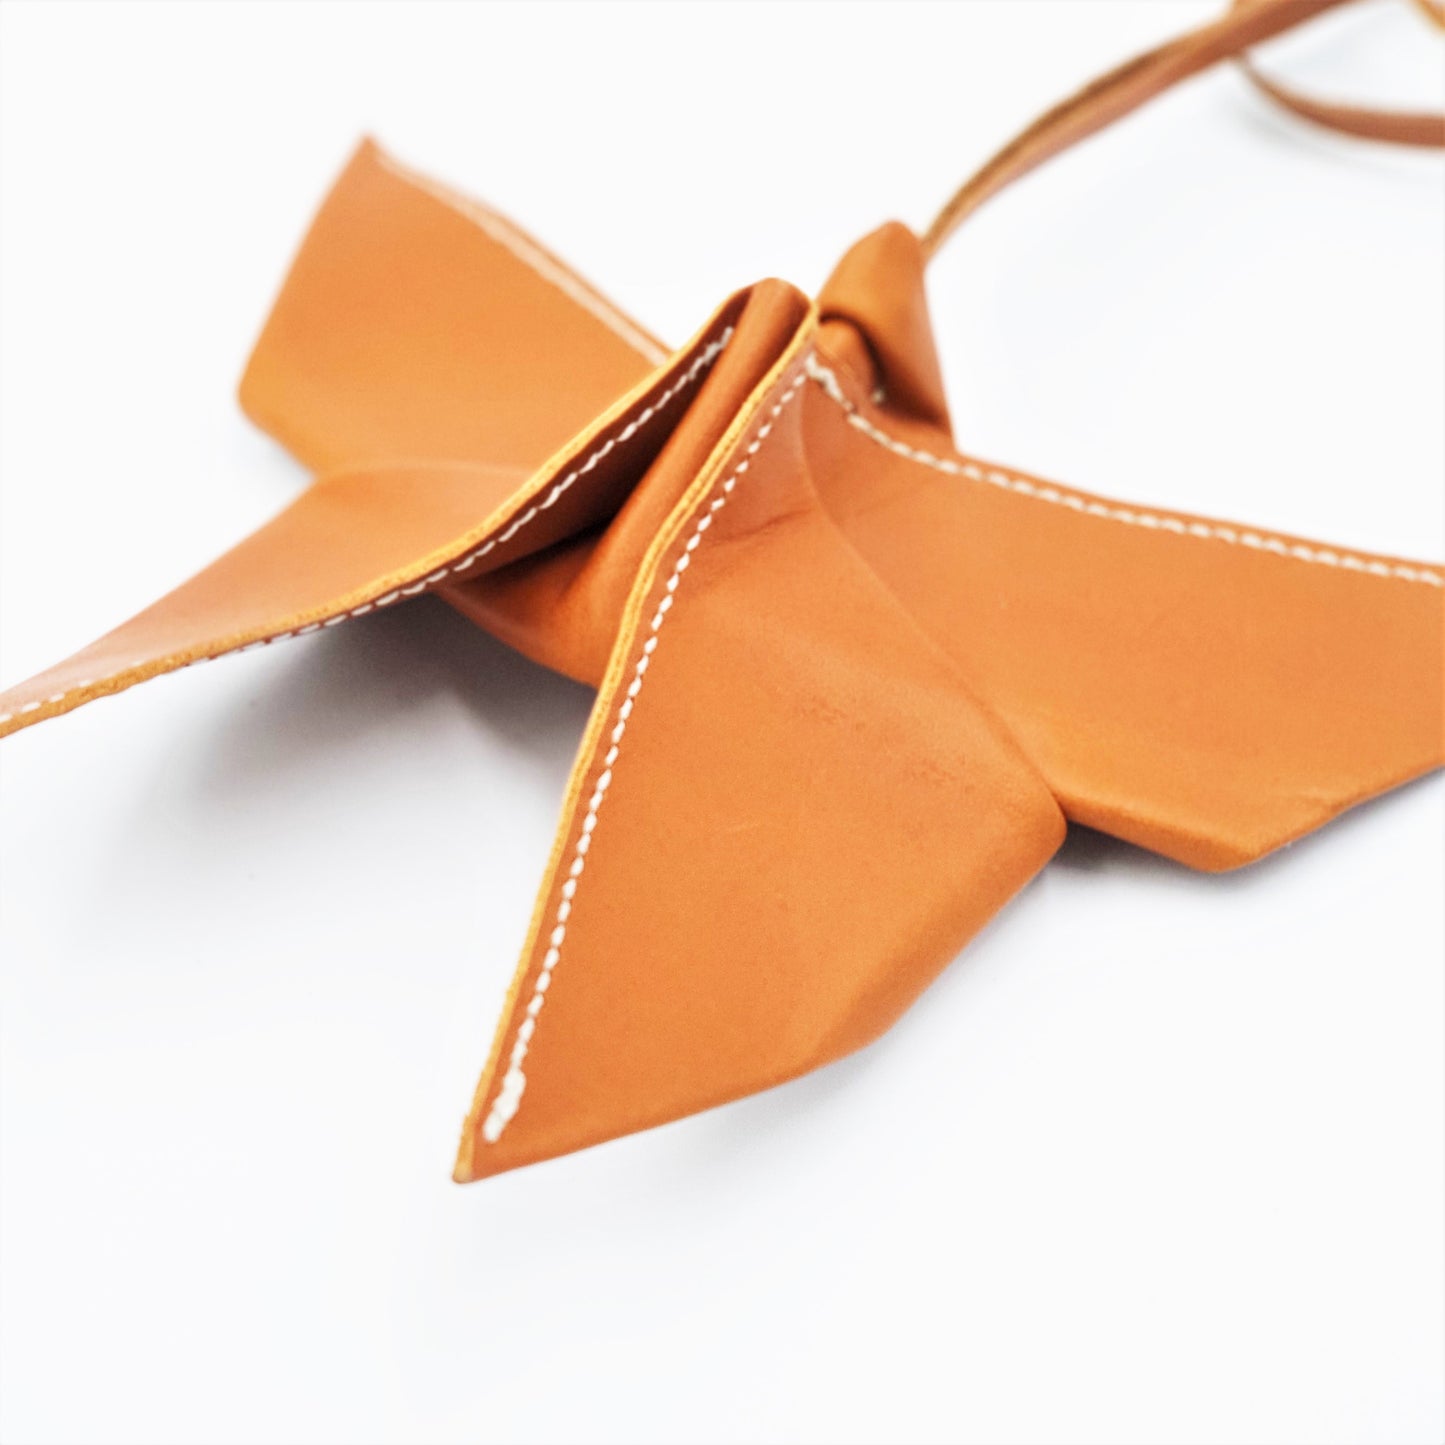 Studio Arkademie CHOCHO 18 Butterfly Leather Bag Charm